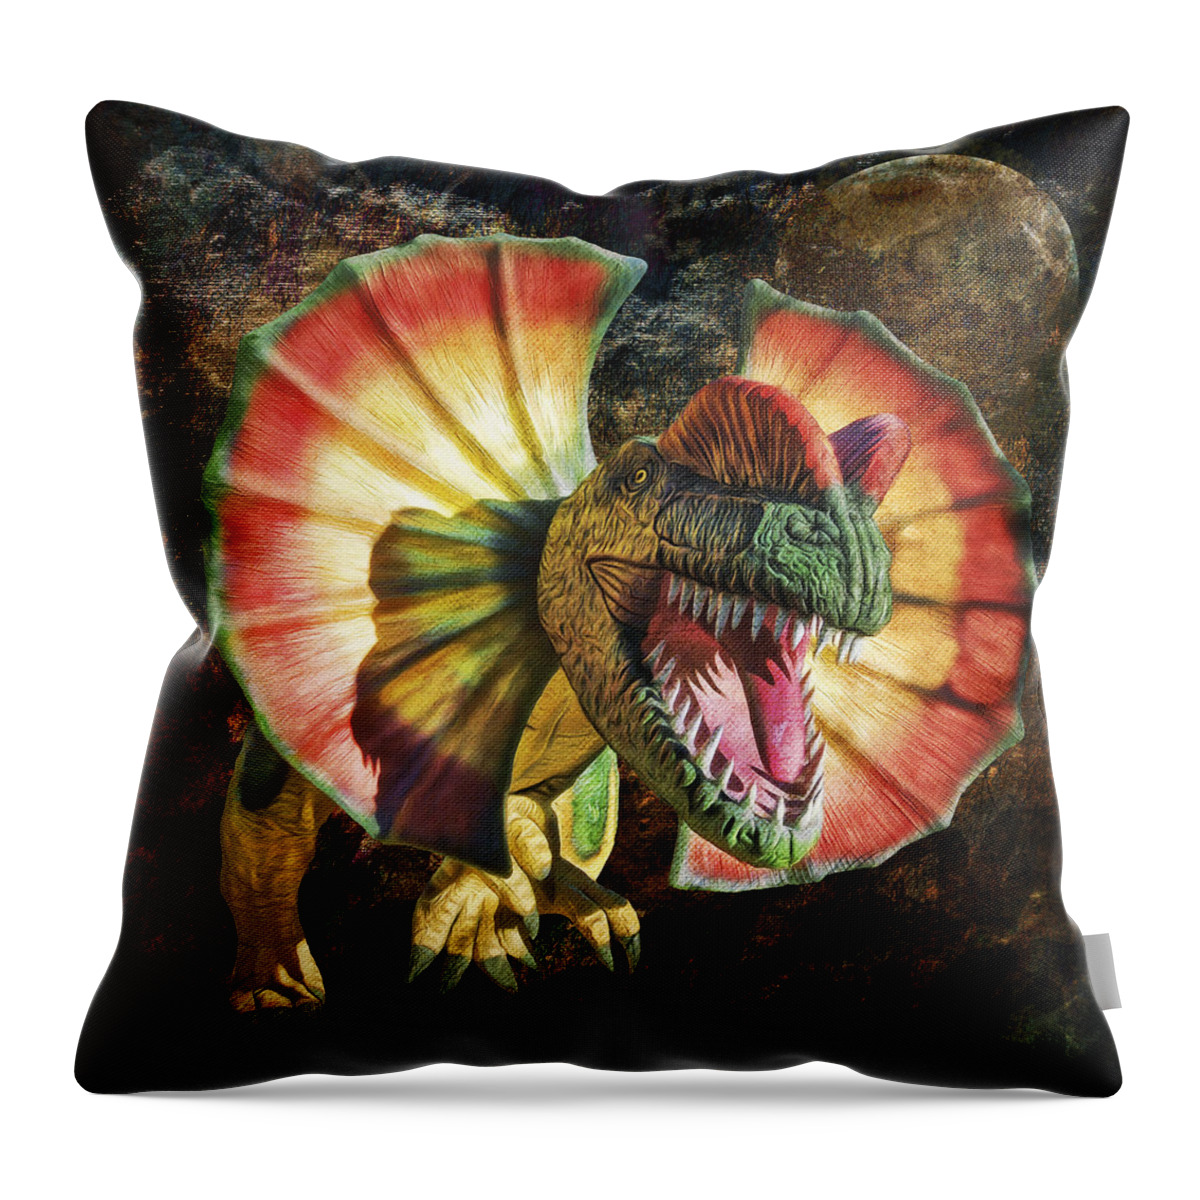 Dinosaur Throw Pillow featuring the photograph Dilophosaurus Spitting Dinosaur by Sandra Selle Rodriguez